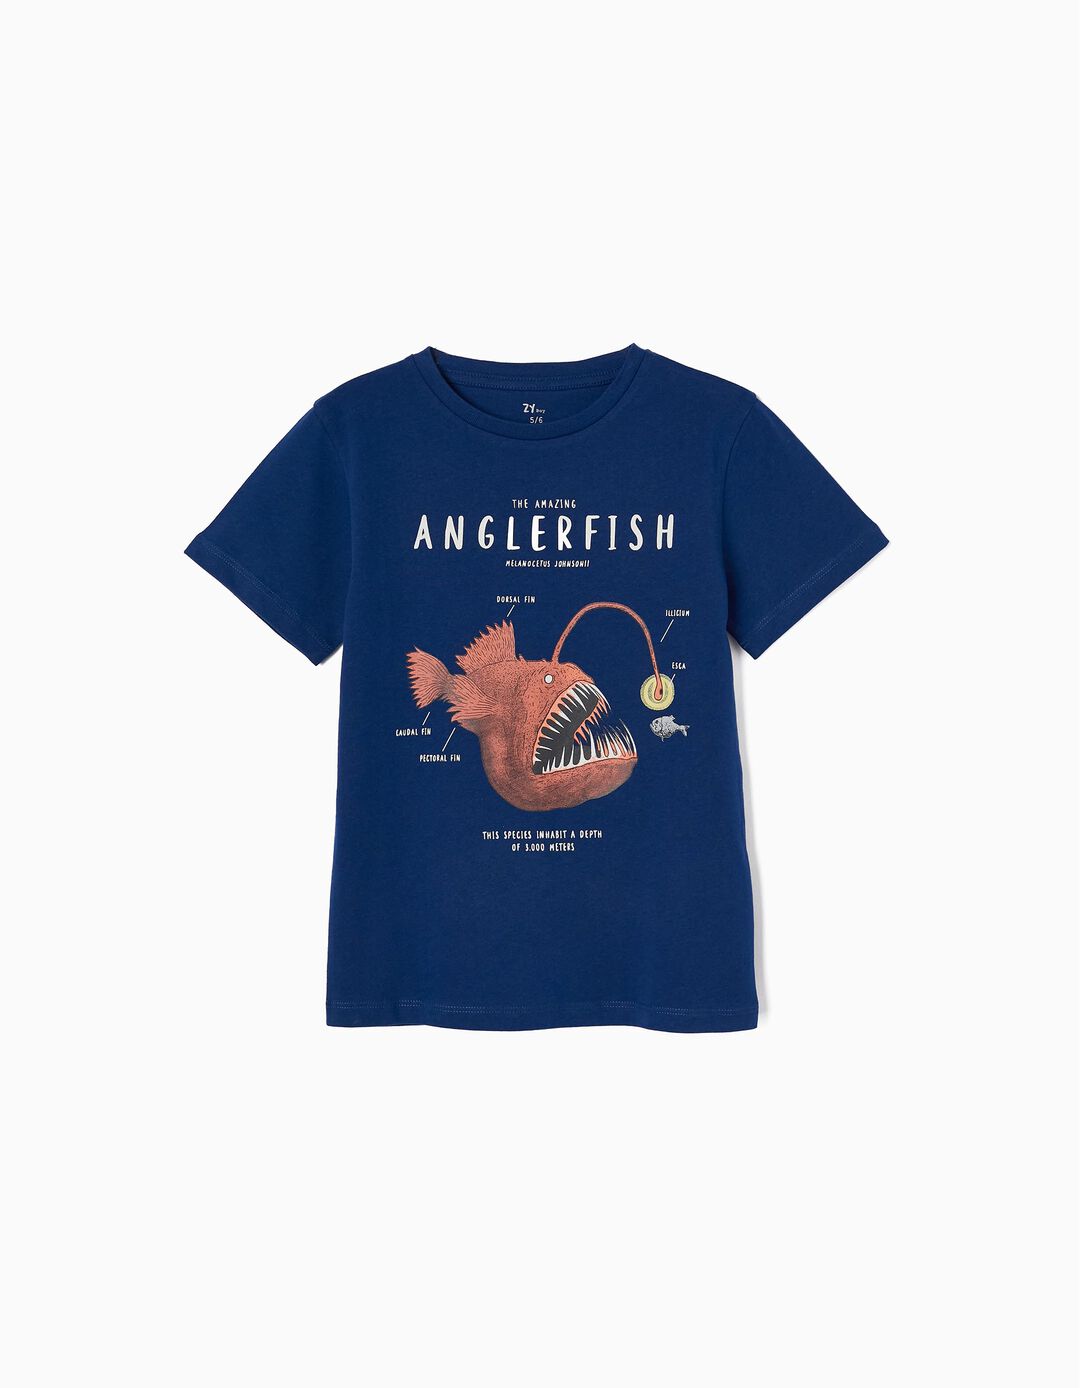 T-shirt for Boys 'Anglerfish', Dark Blue